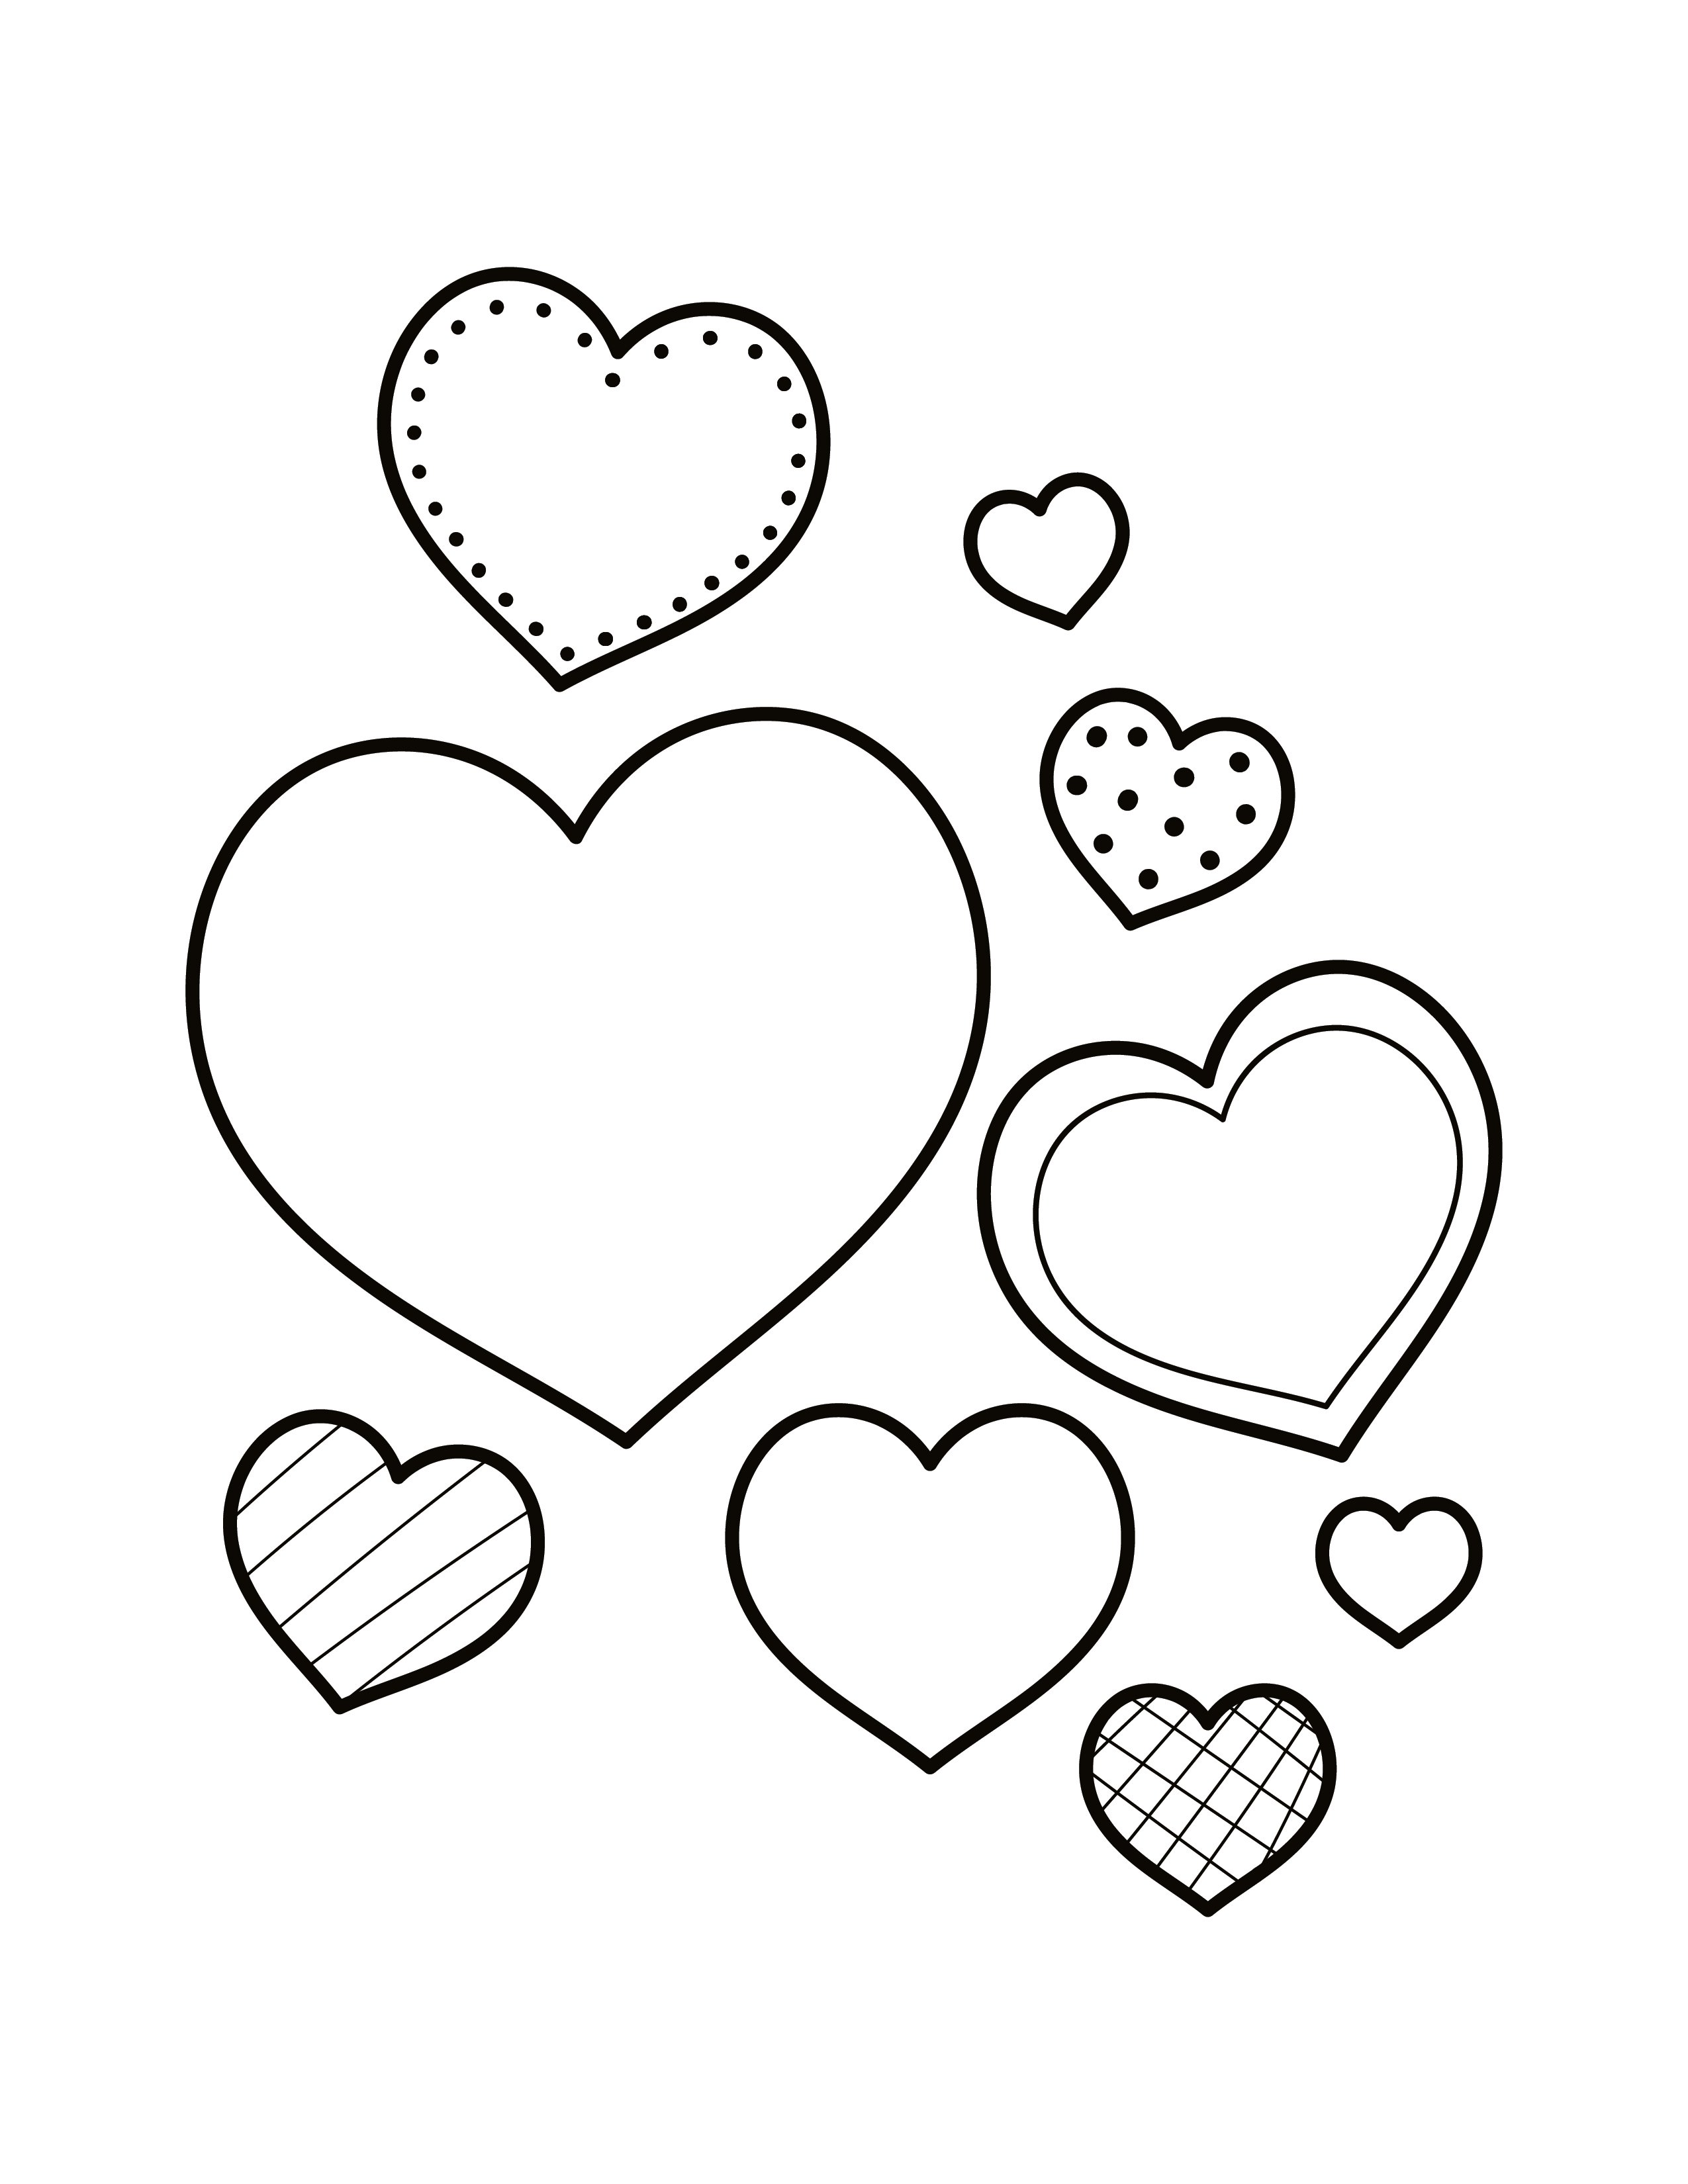 FREE Zebra Heart Coloring Page in EPS, Illustrator, JPG, PNG, PDF, SVG ...